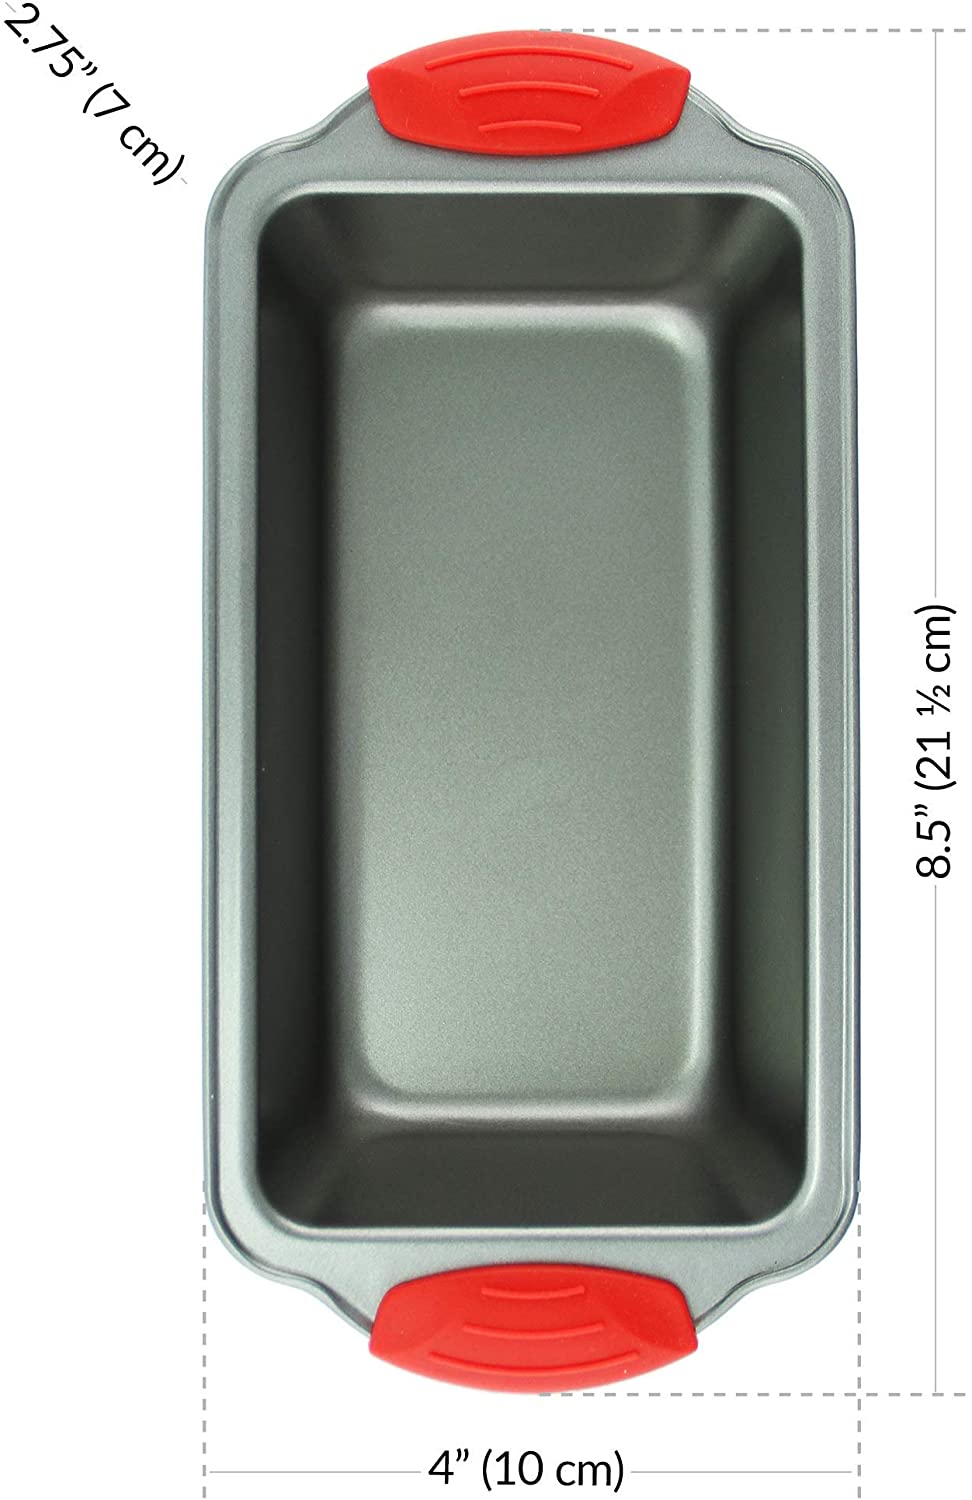 Boxiki Kitchen Non-Stick Steel 8x8 Square Baking Pan Durable, Convenient,  and Premium Quality Non-Stick Baking Mold Bakeware.